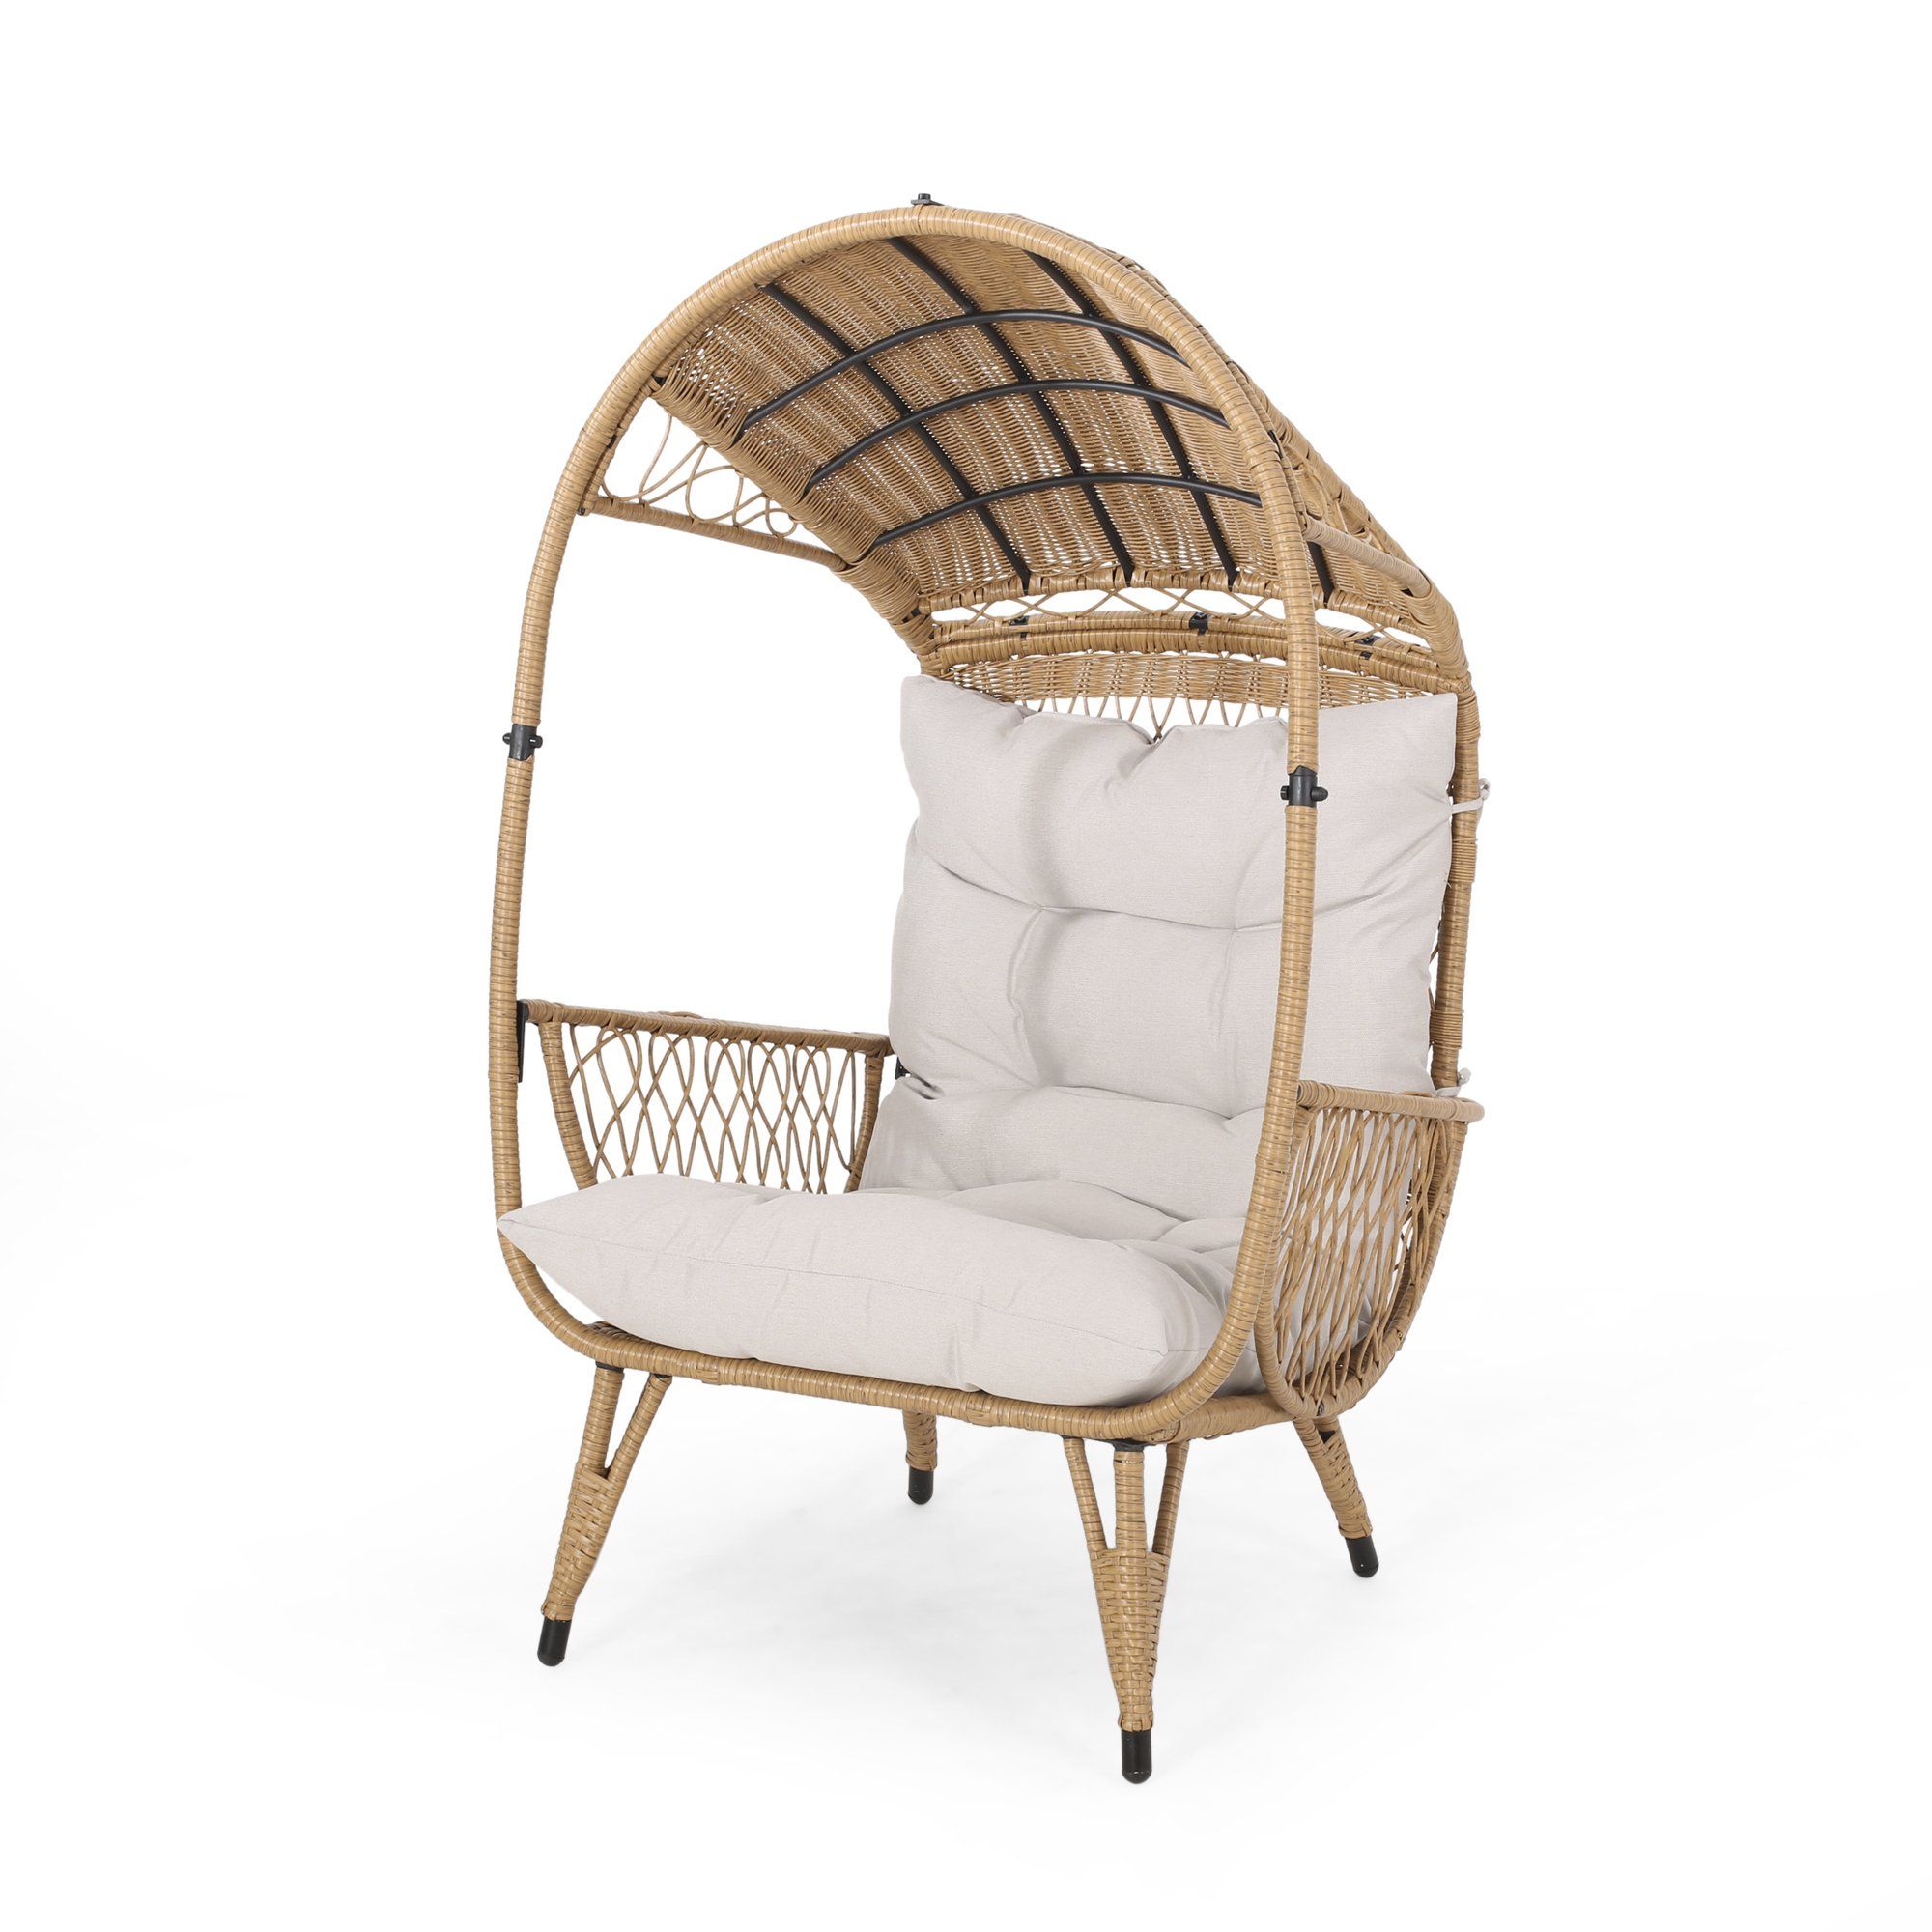 Maurice Outdoor Wicker Standing Basket Chair with Cushion, Light Brown, Beige | Walmart (US)